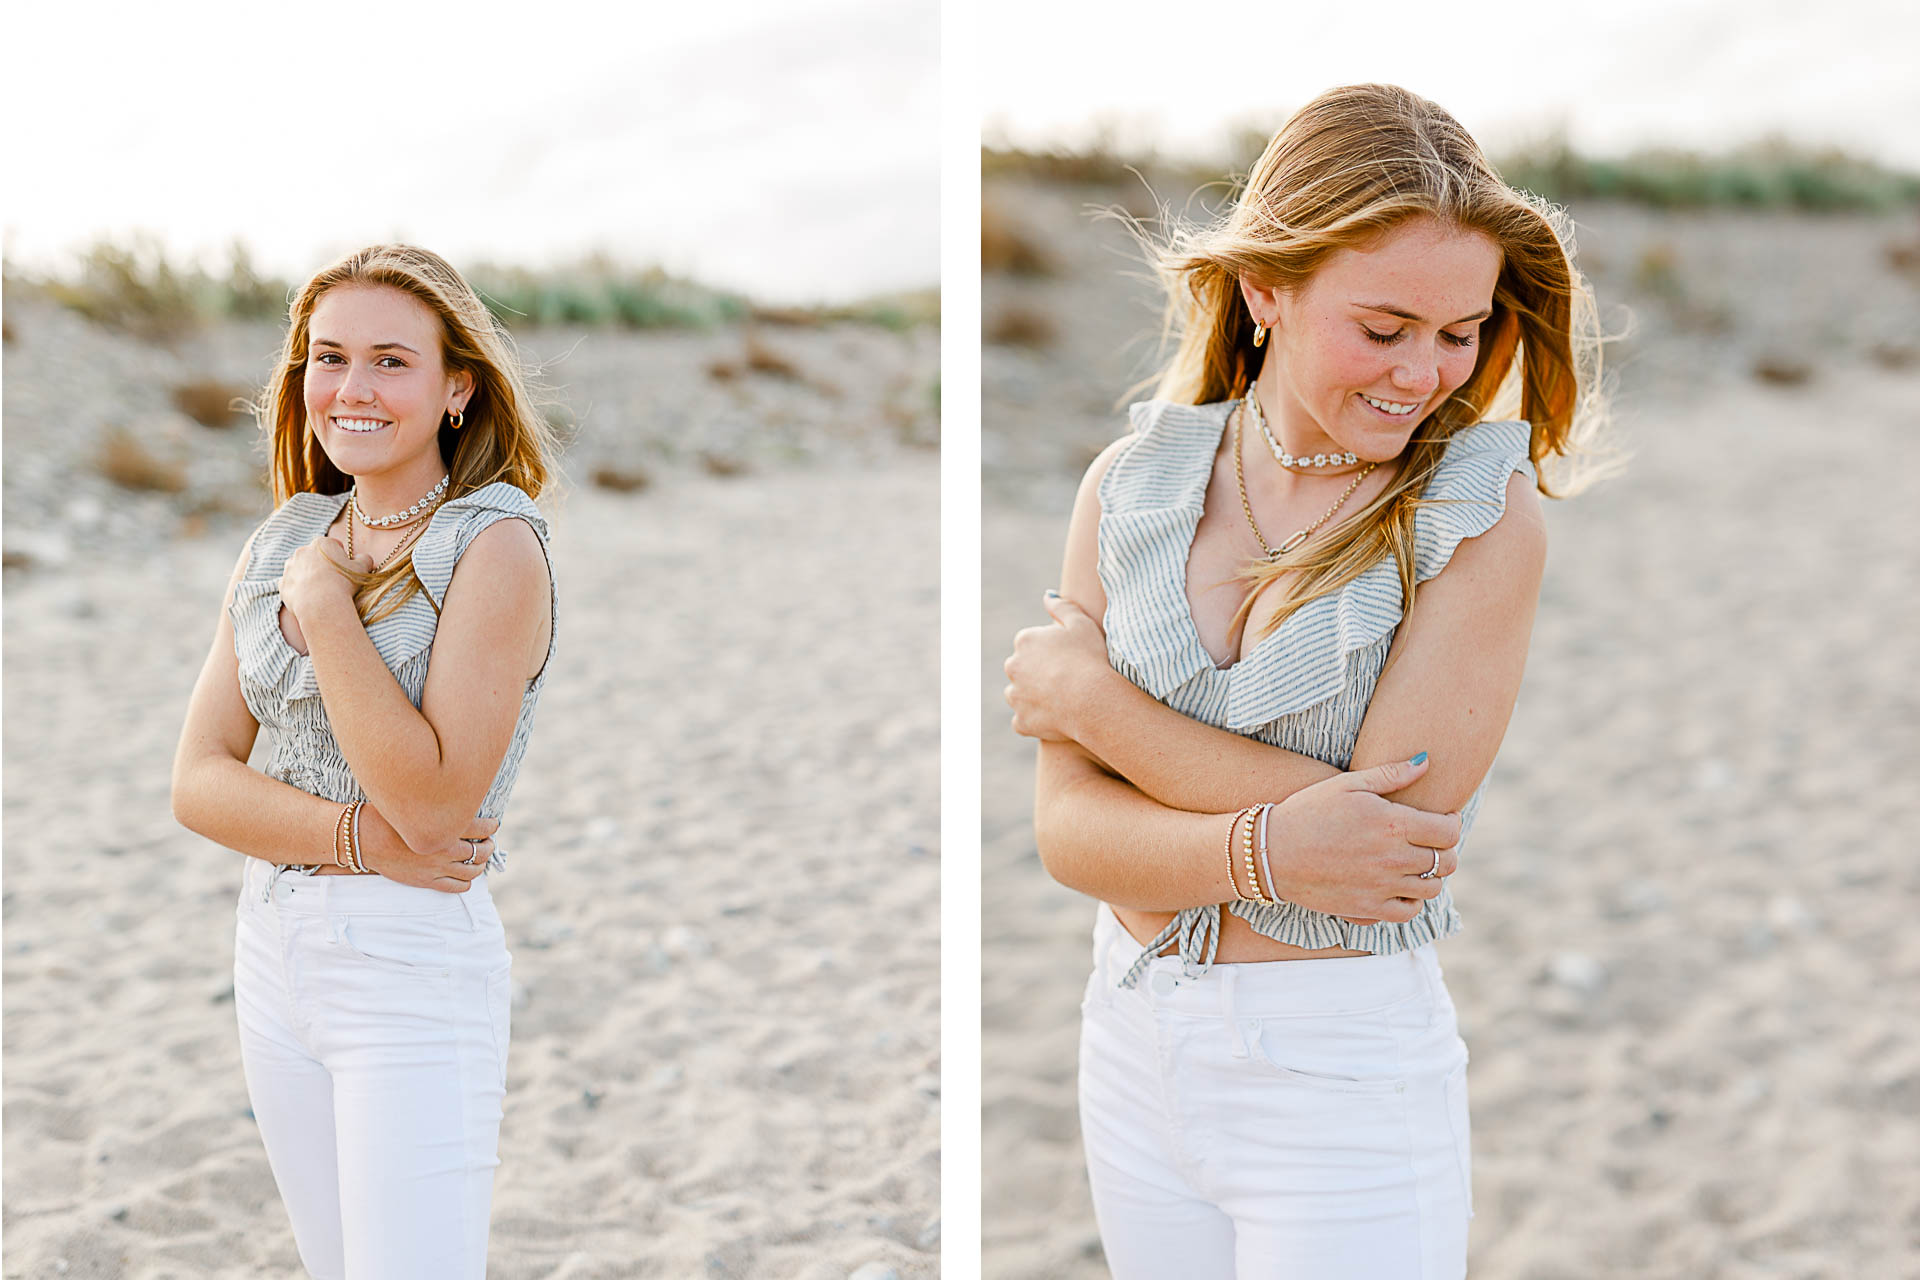 Photo by Scituate Senior Portrait Photographer Christina Runnals | High school senior girl standing on the beach